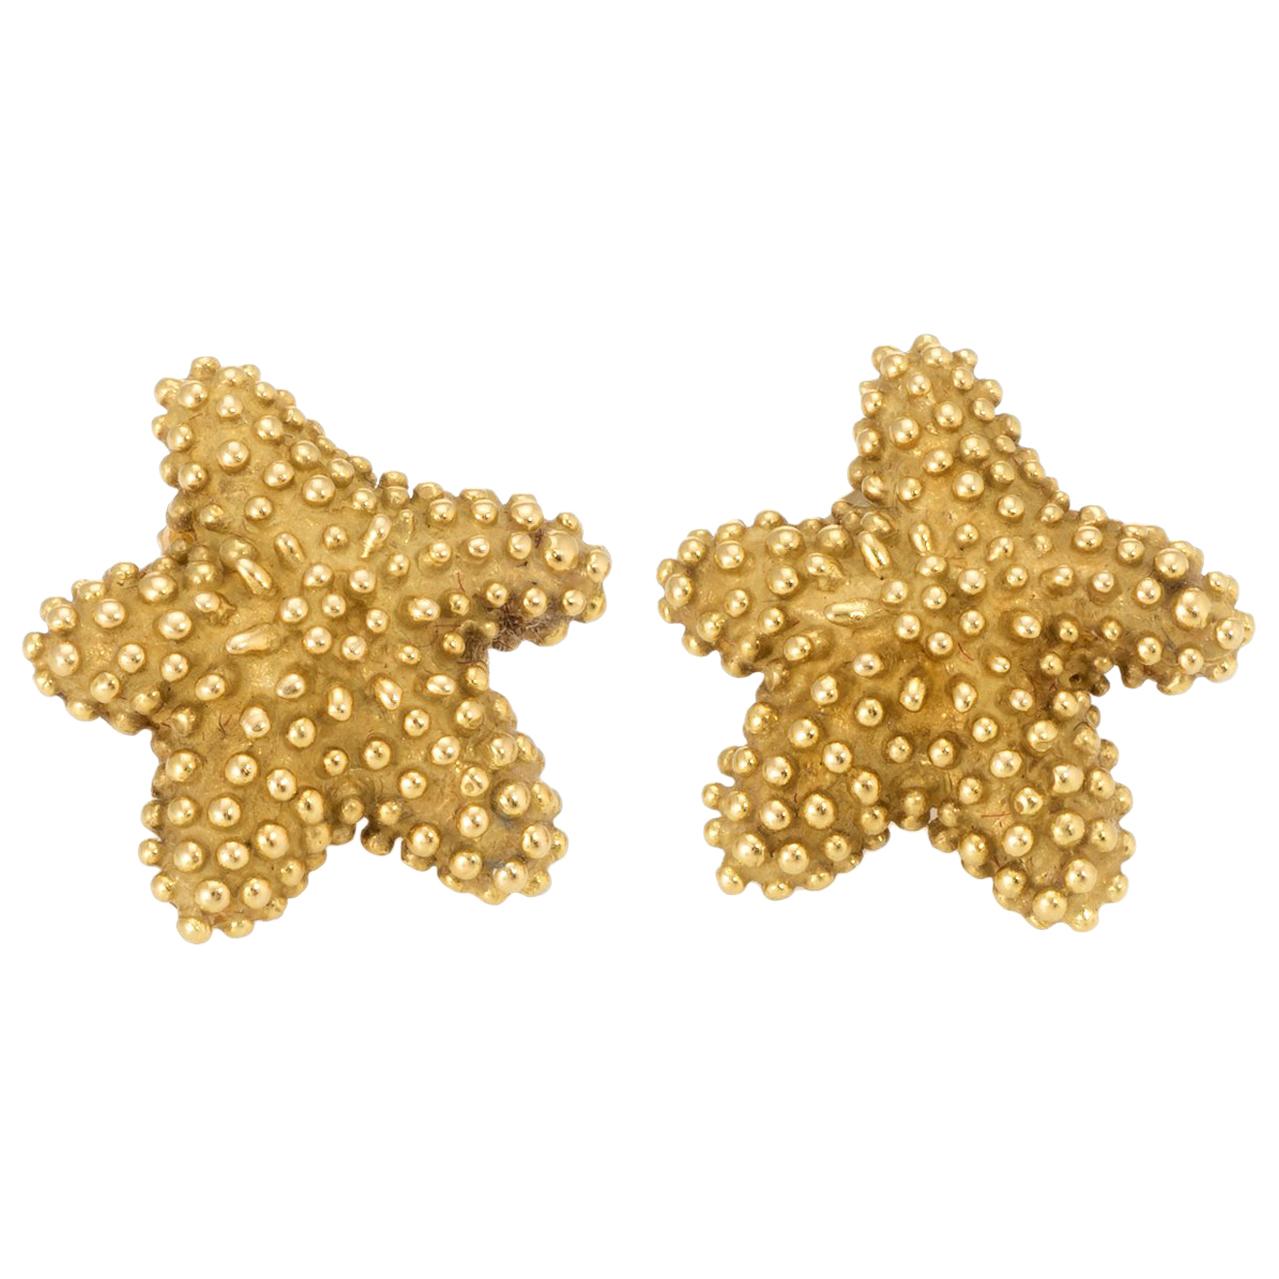 Tiffany & Co. Starfish Earrings Vintage 18 Karat Gold Textured Estate Jewelry